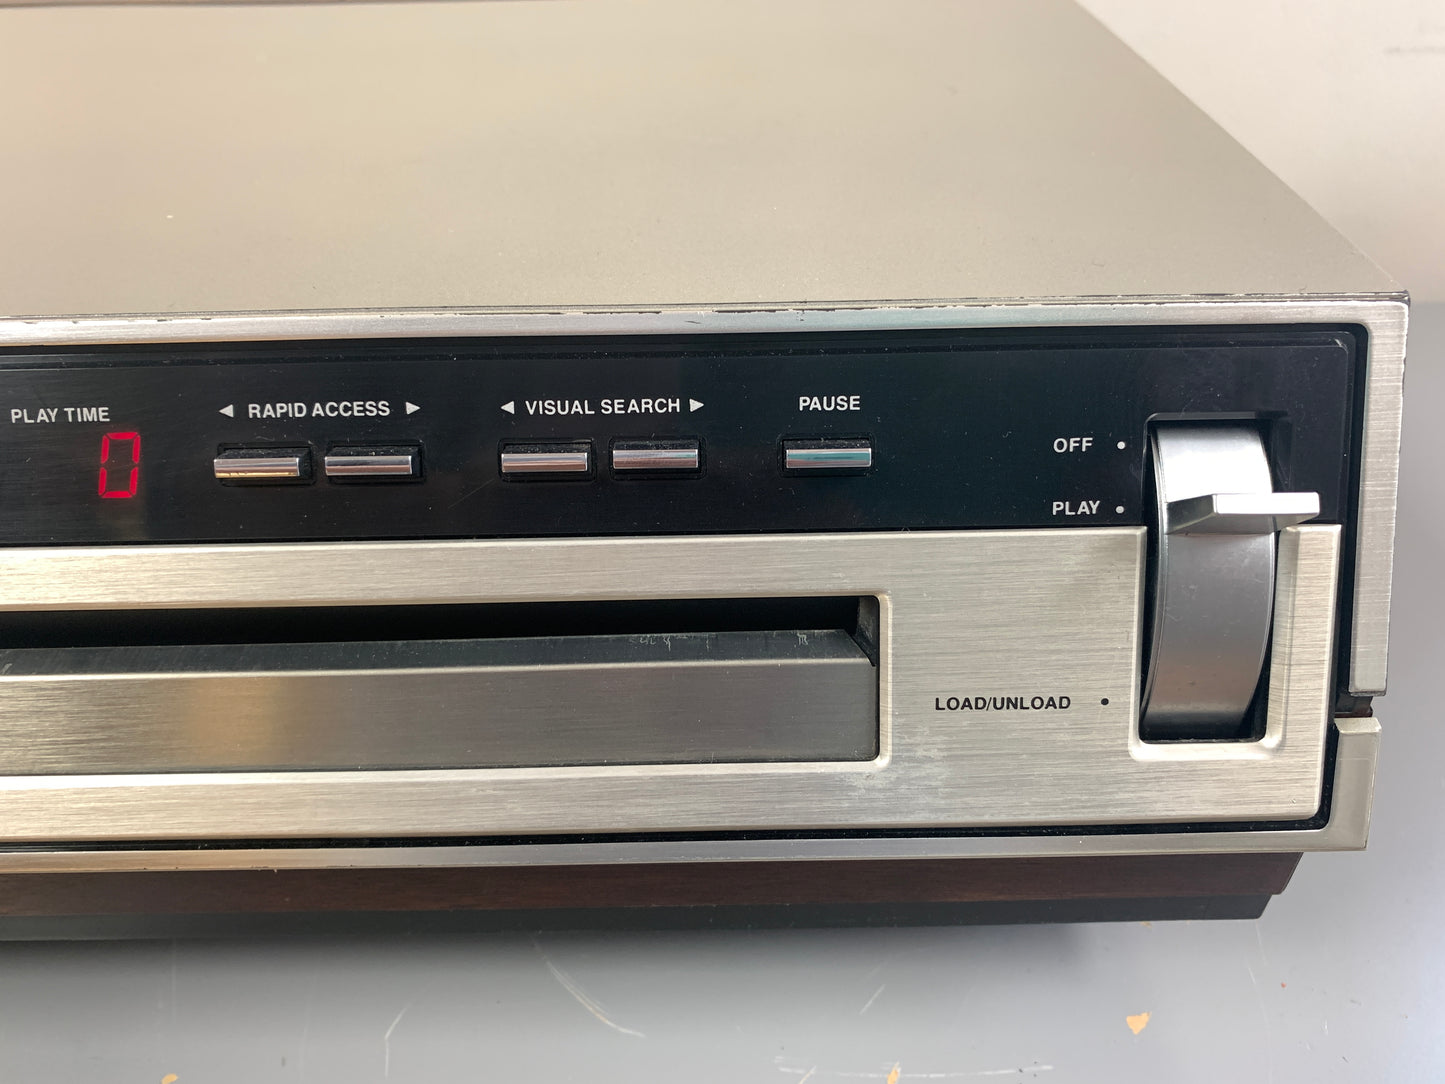 RCS SGT-200 Selecta Vision Video Disc Player